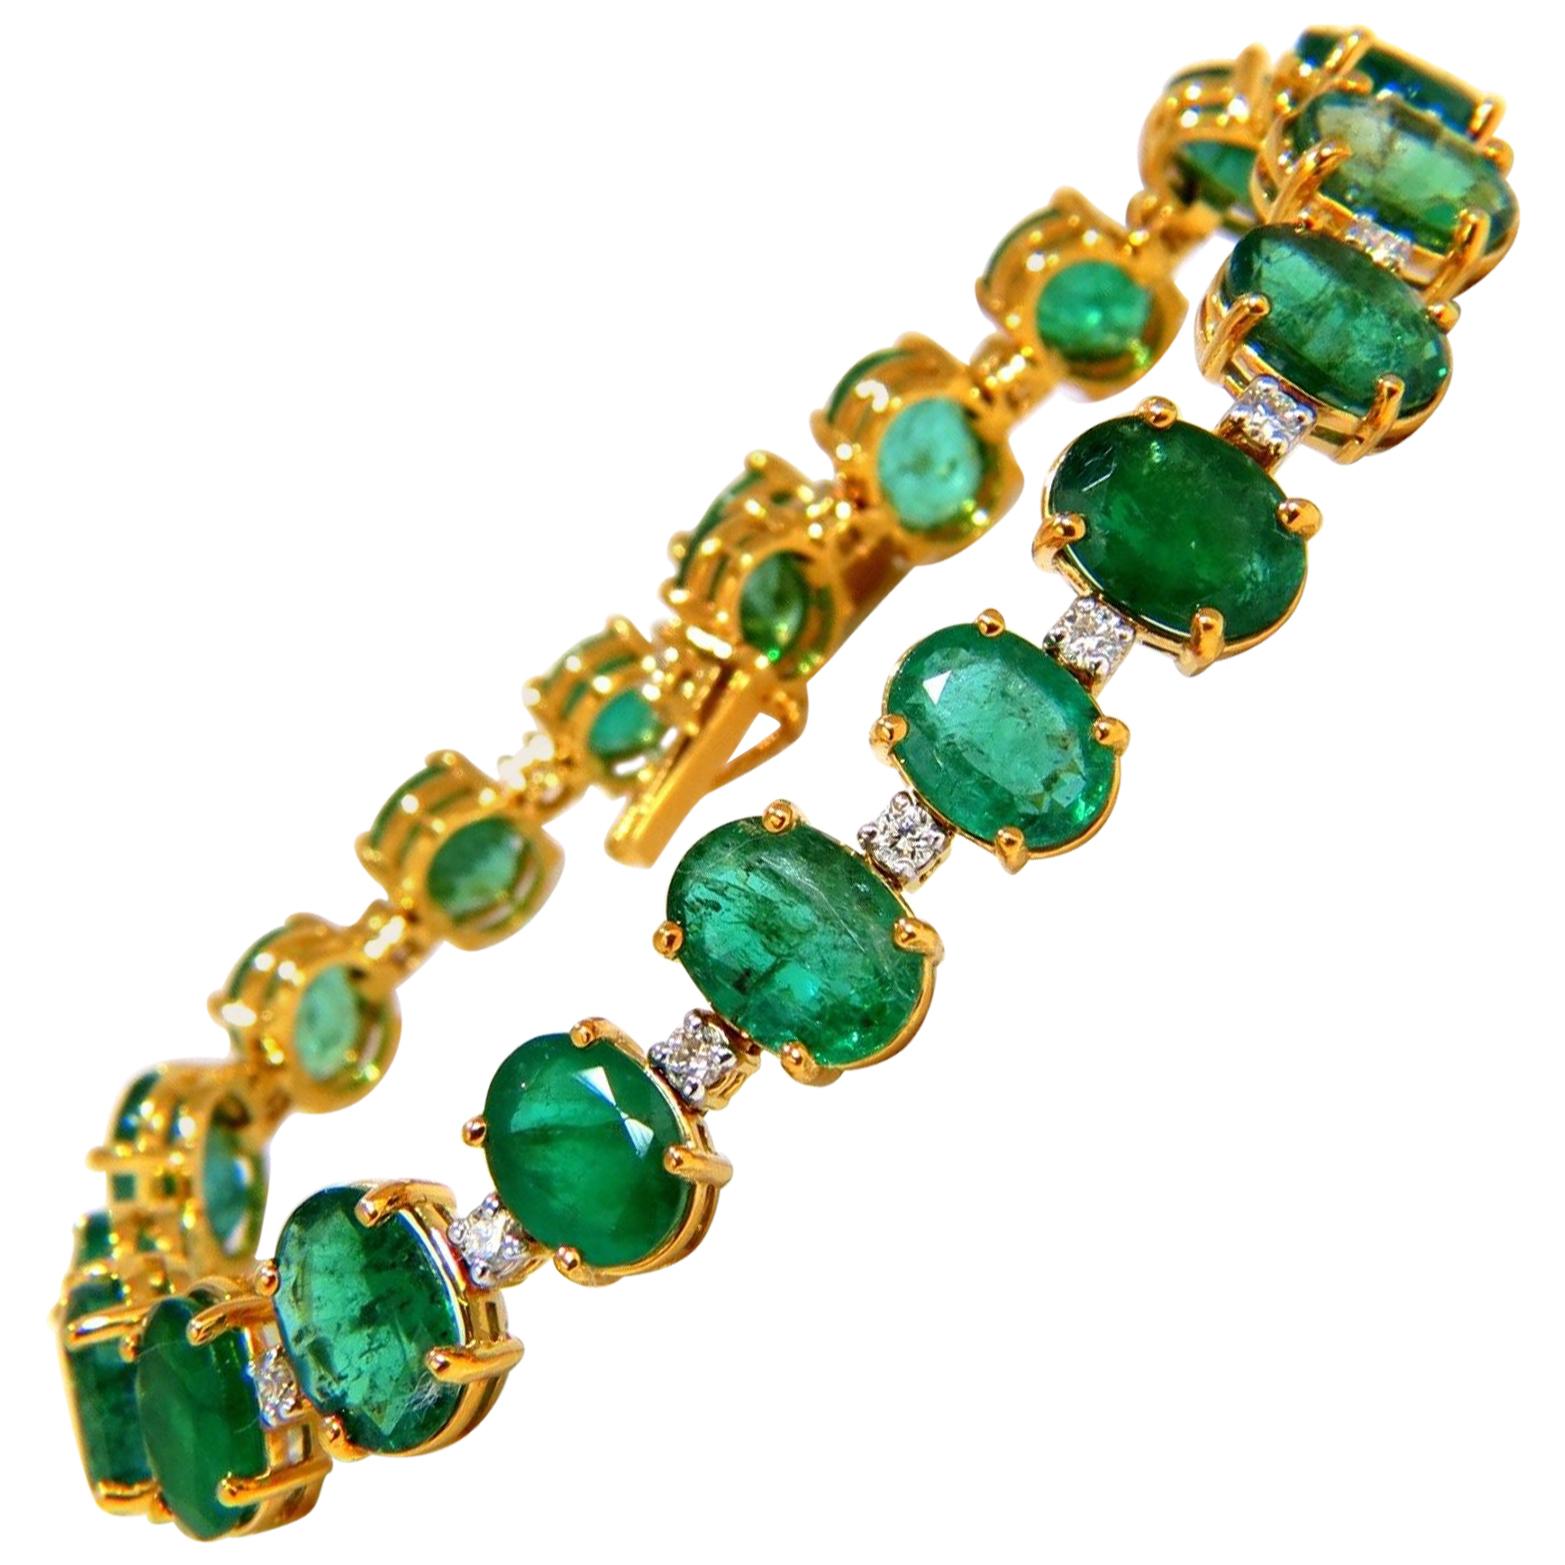 Bracelet tennis classique en émeraudes 27,42 carats et 0,75 carat de diamants, verts naturels 14 carats